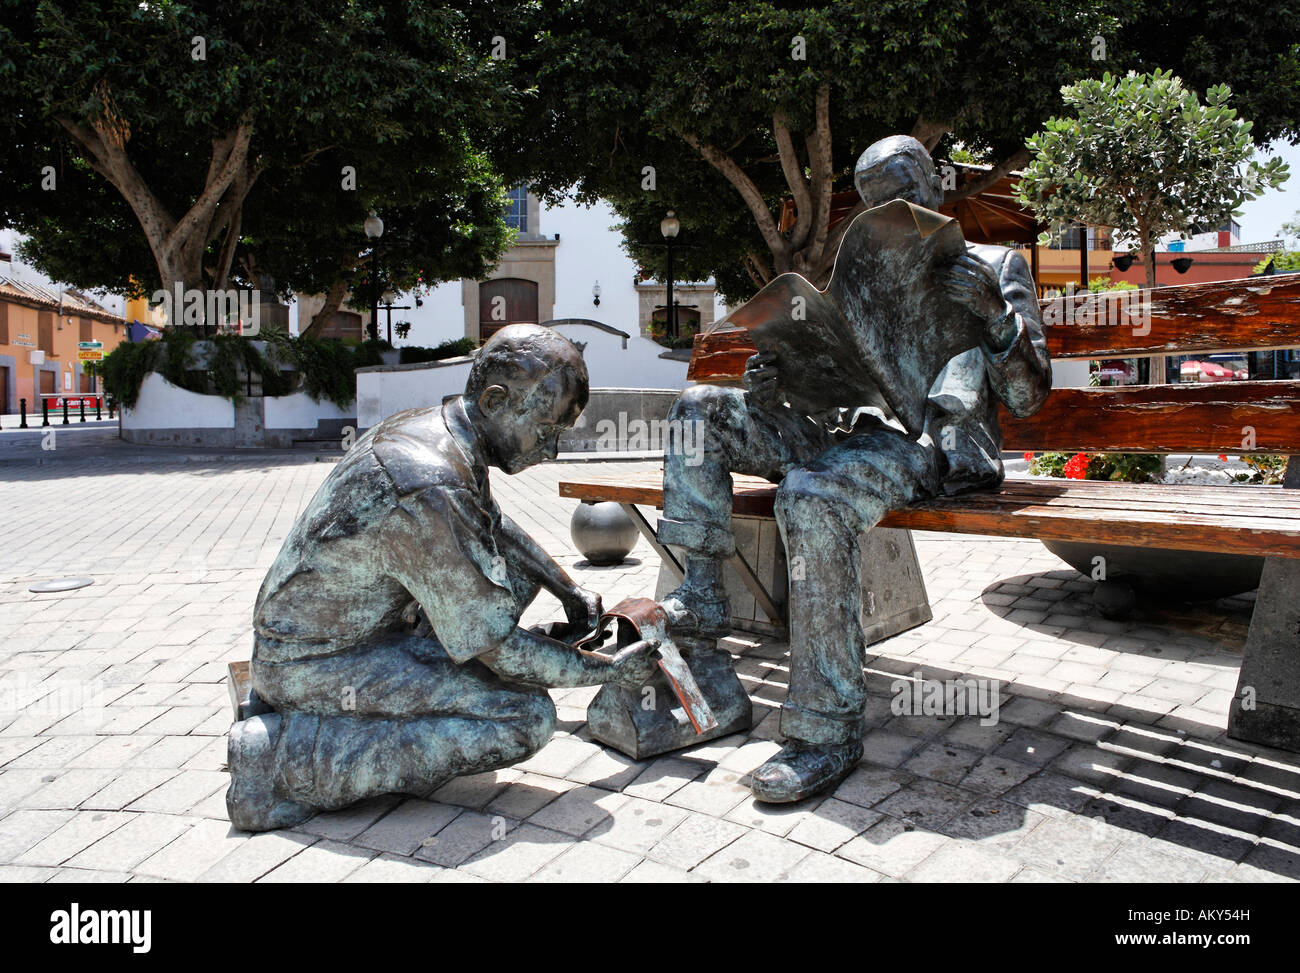 Shoeshine boy statue, Plaza San Gregorio, Telde, Gran Canaria, Spain Stock Photo